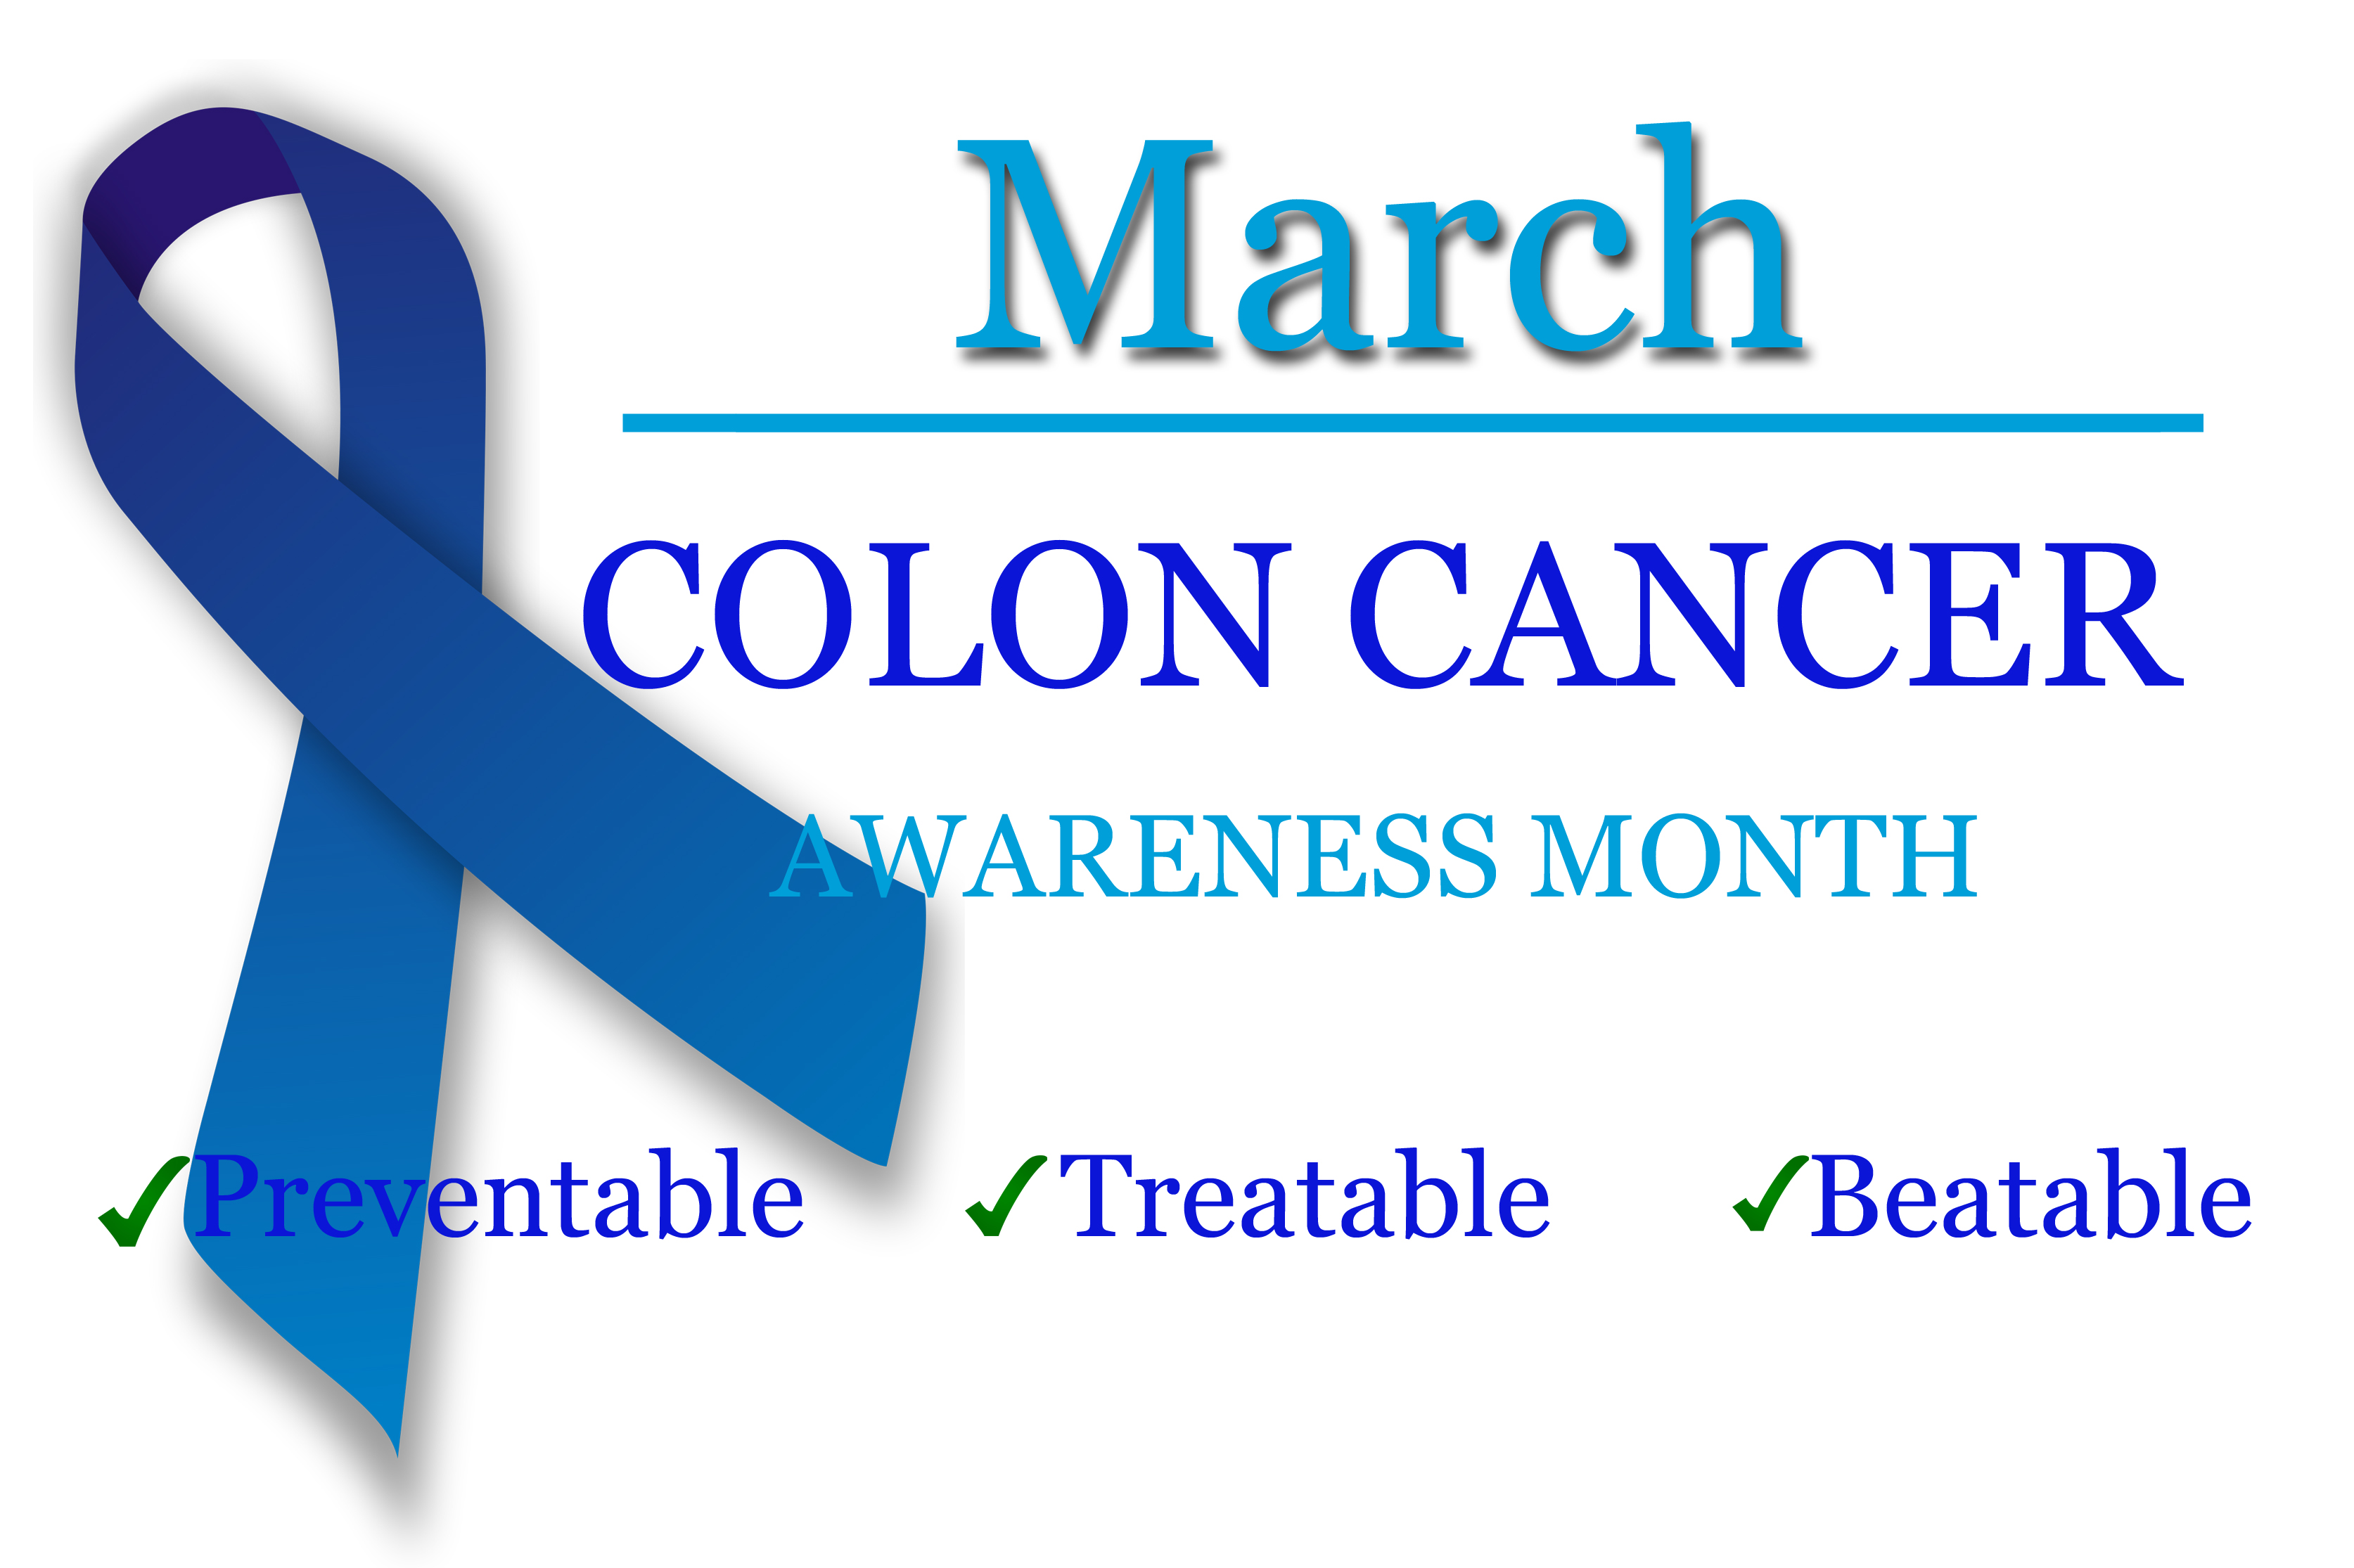 6 Ways to Prevent Colon Cancer